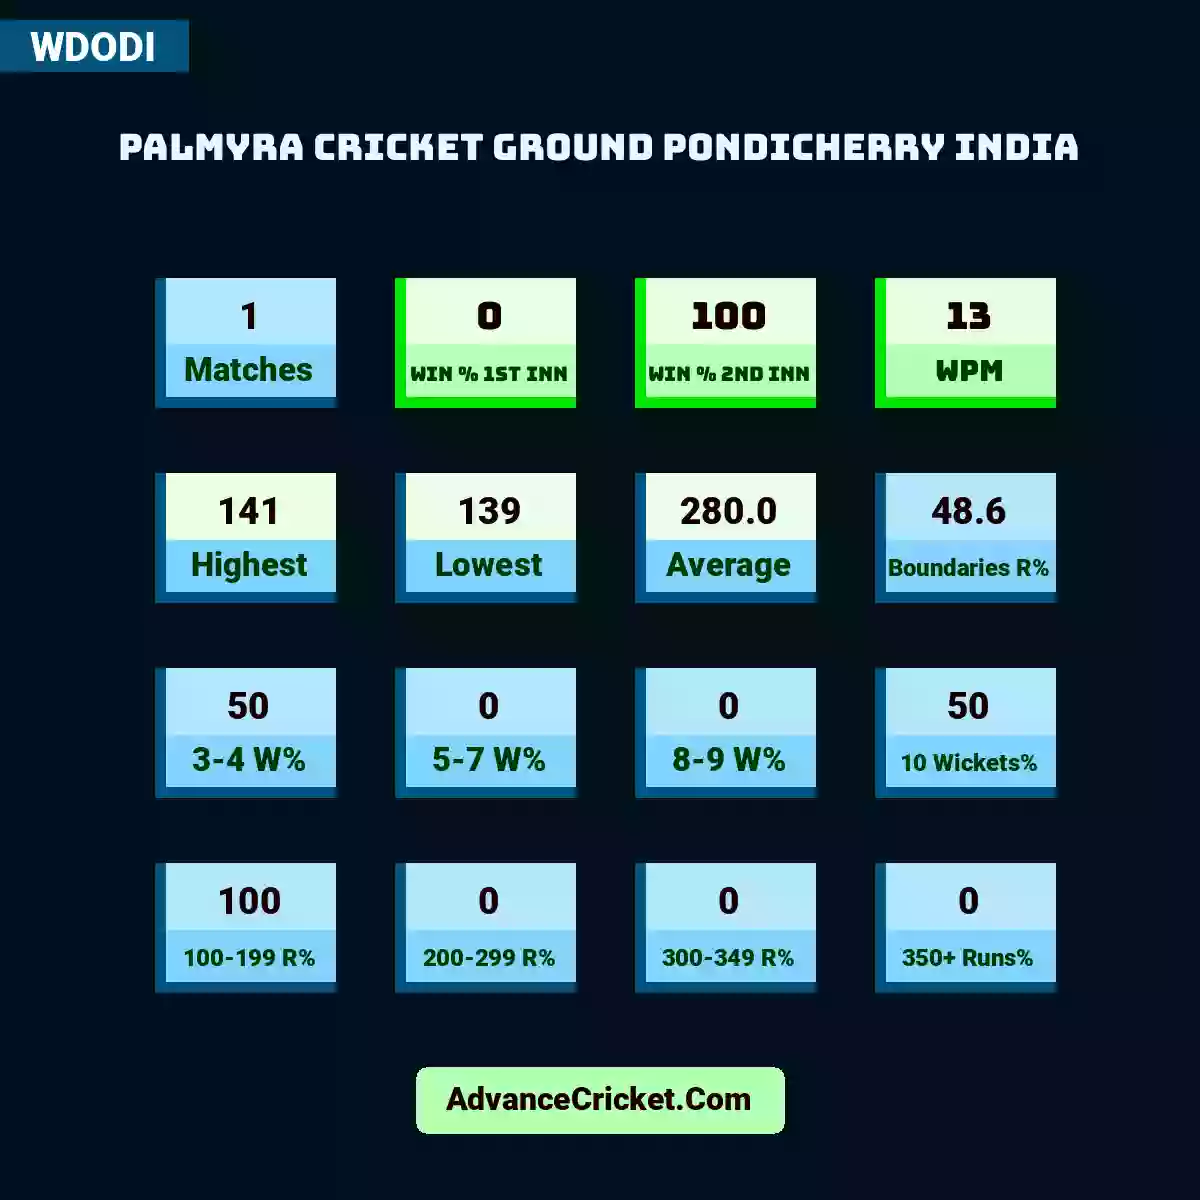 Image showing Palmyra Cricket Ground Pondicherry India with Matches: 1, Win % 1st Inn: 0, Win % 2nd Inn: 100, WPM: 13, Highest: 141, Lowest: 139, Average: 280.0, Boundaries R%: 48.6, 3-4 W%: 50, 5-7 W%: 0, 8-9 W%: 0, 10 Wickets%: 50, 100-199 R%: 100, 200-299 R%: 0, 300-349 R%: 0, 350+ Runs%: 0.